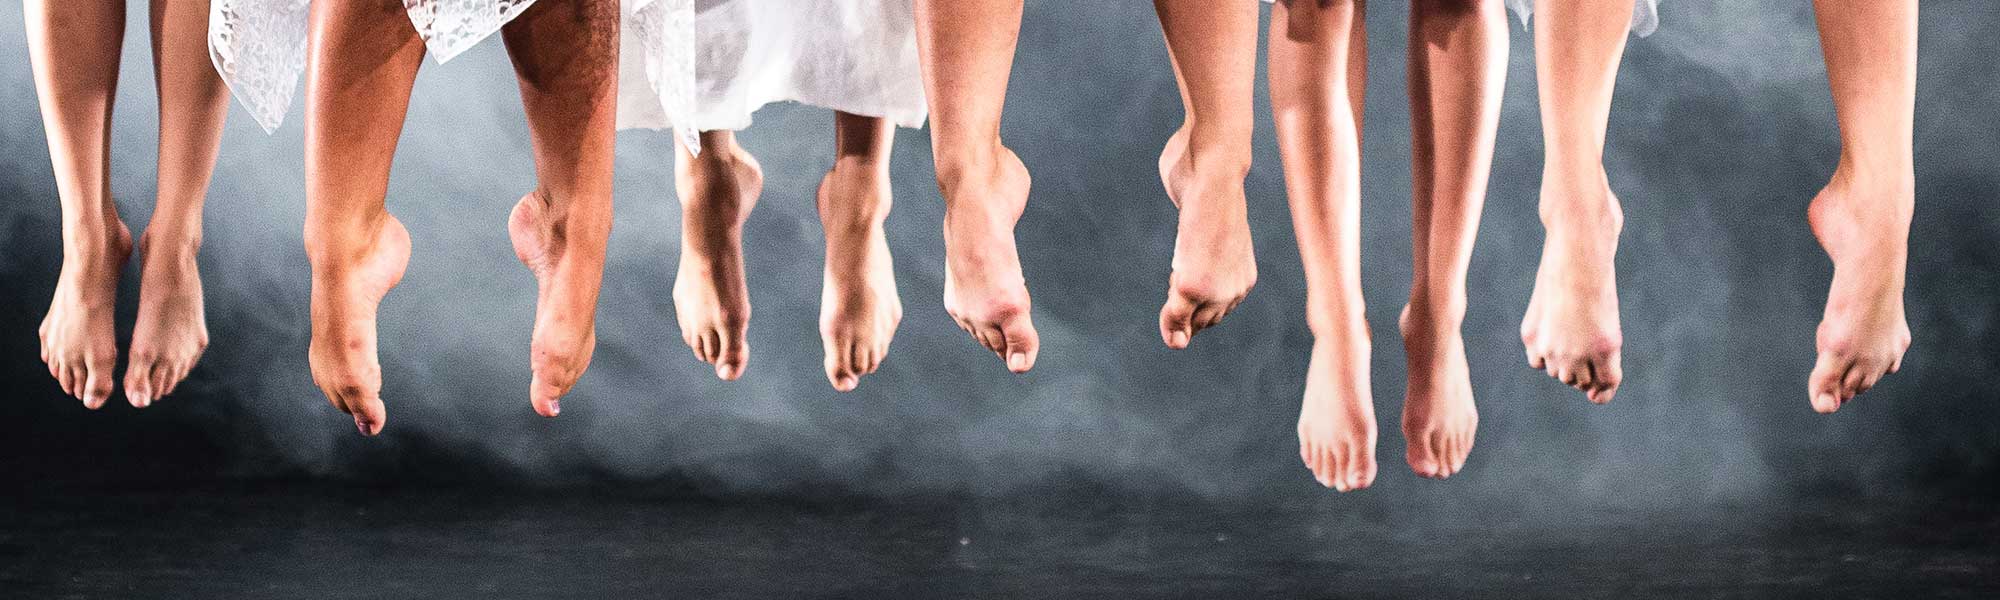 Dancer feet off the ground